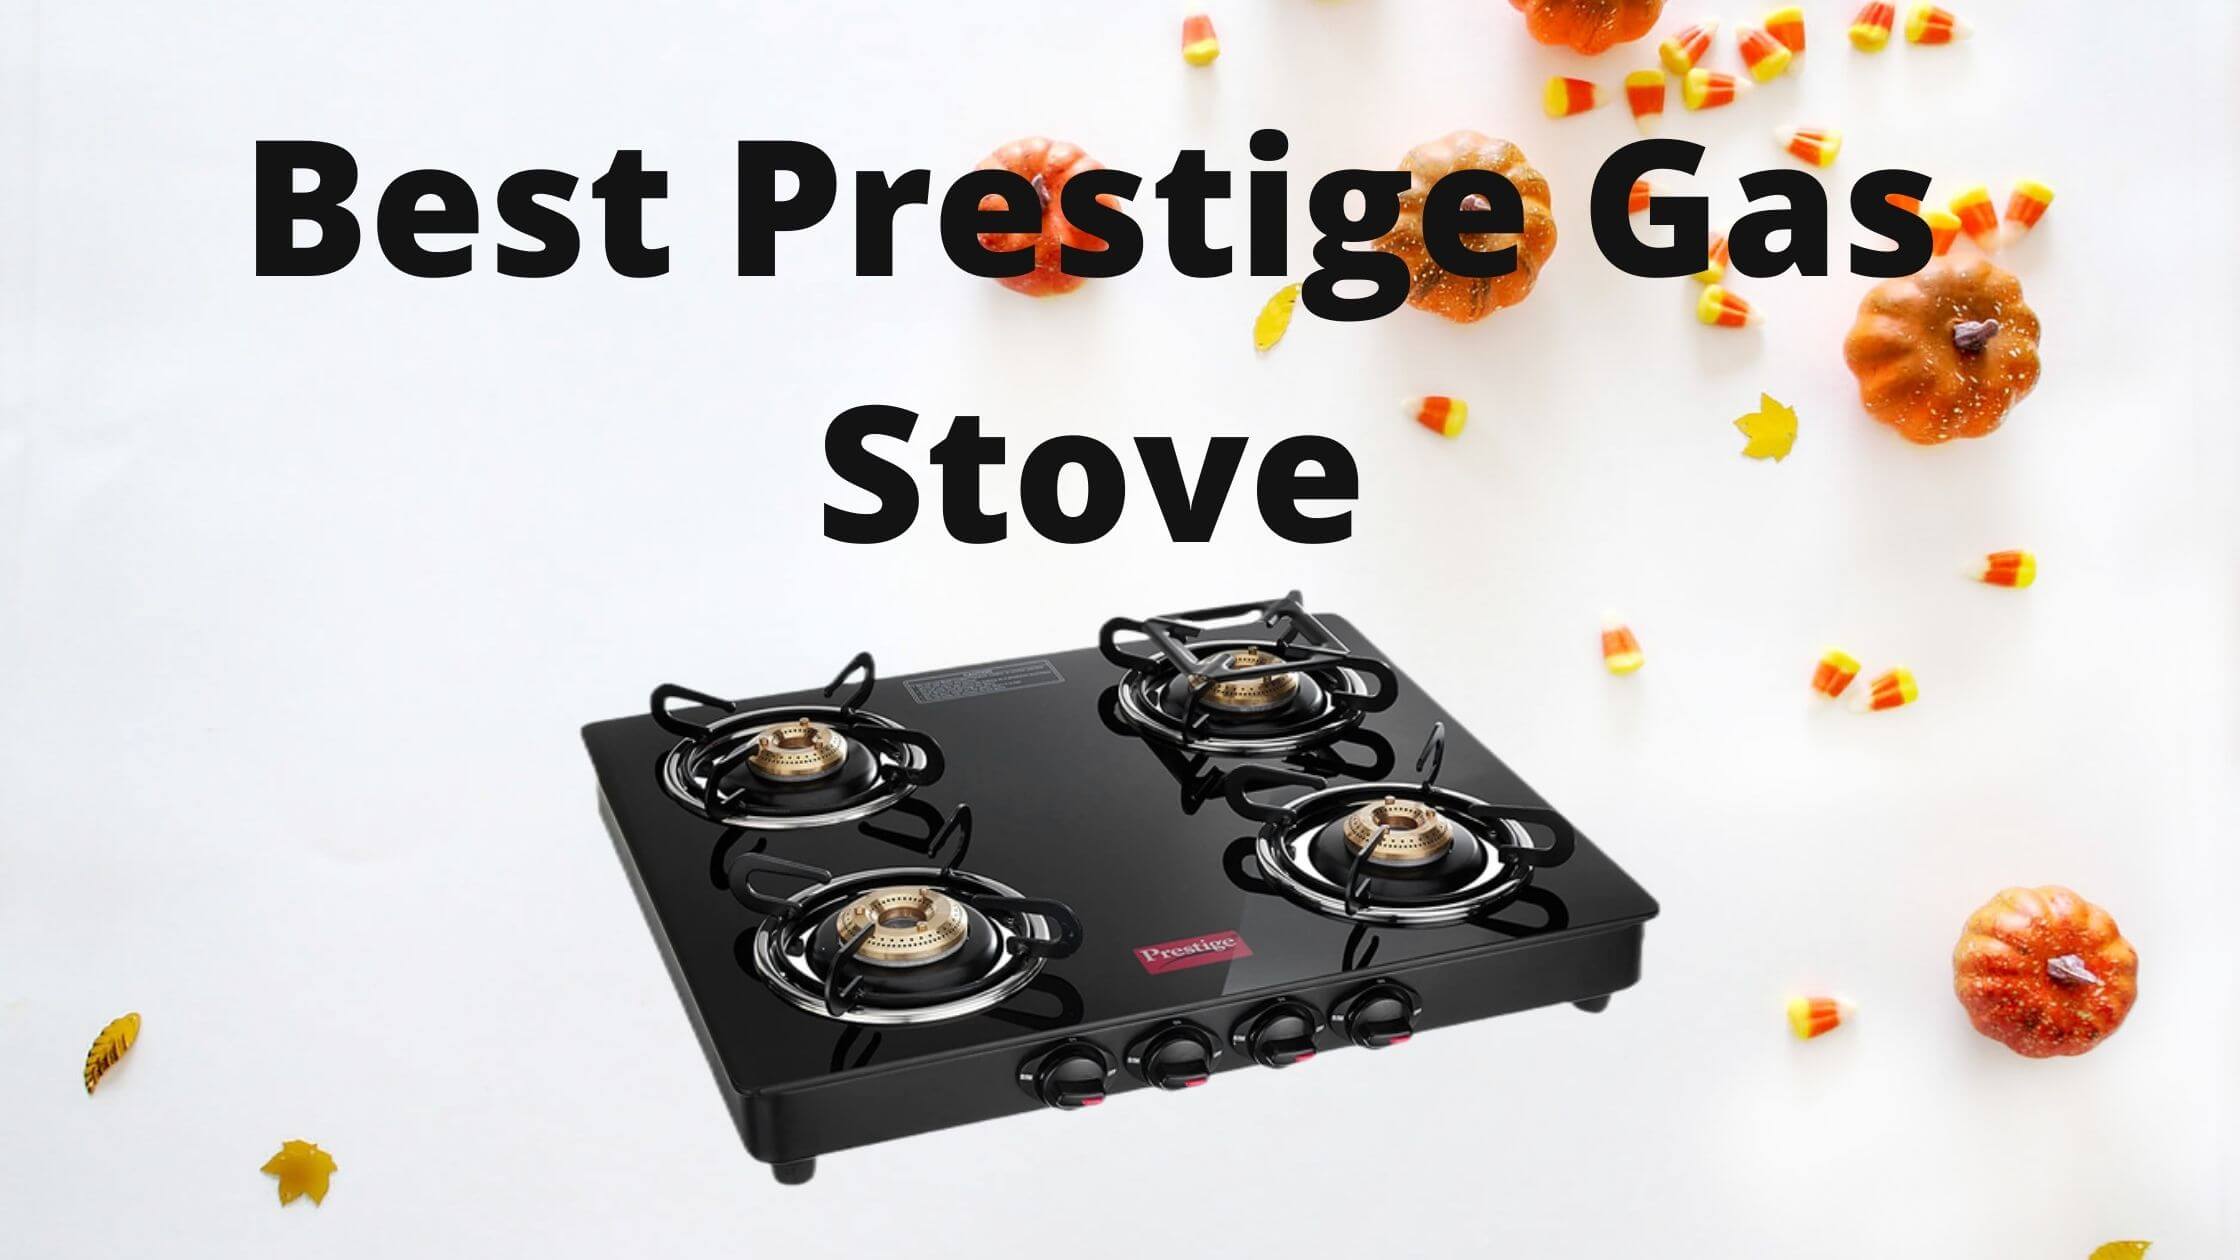 Best Prestige Gas Stove